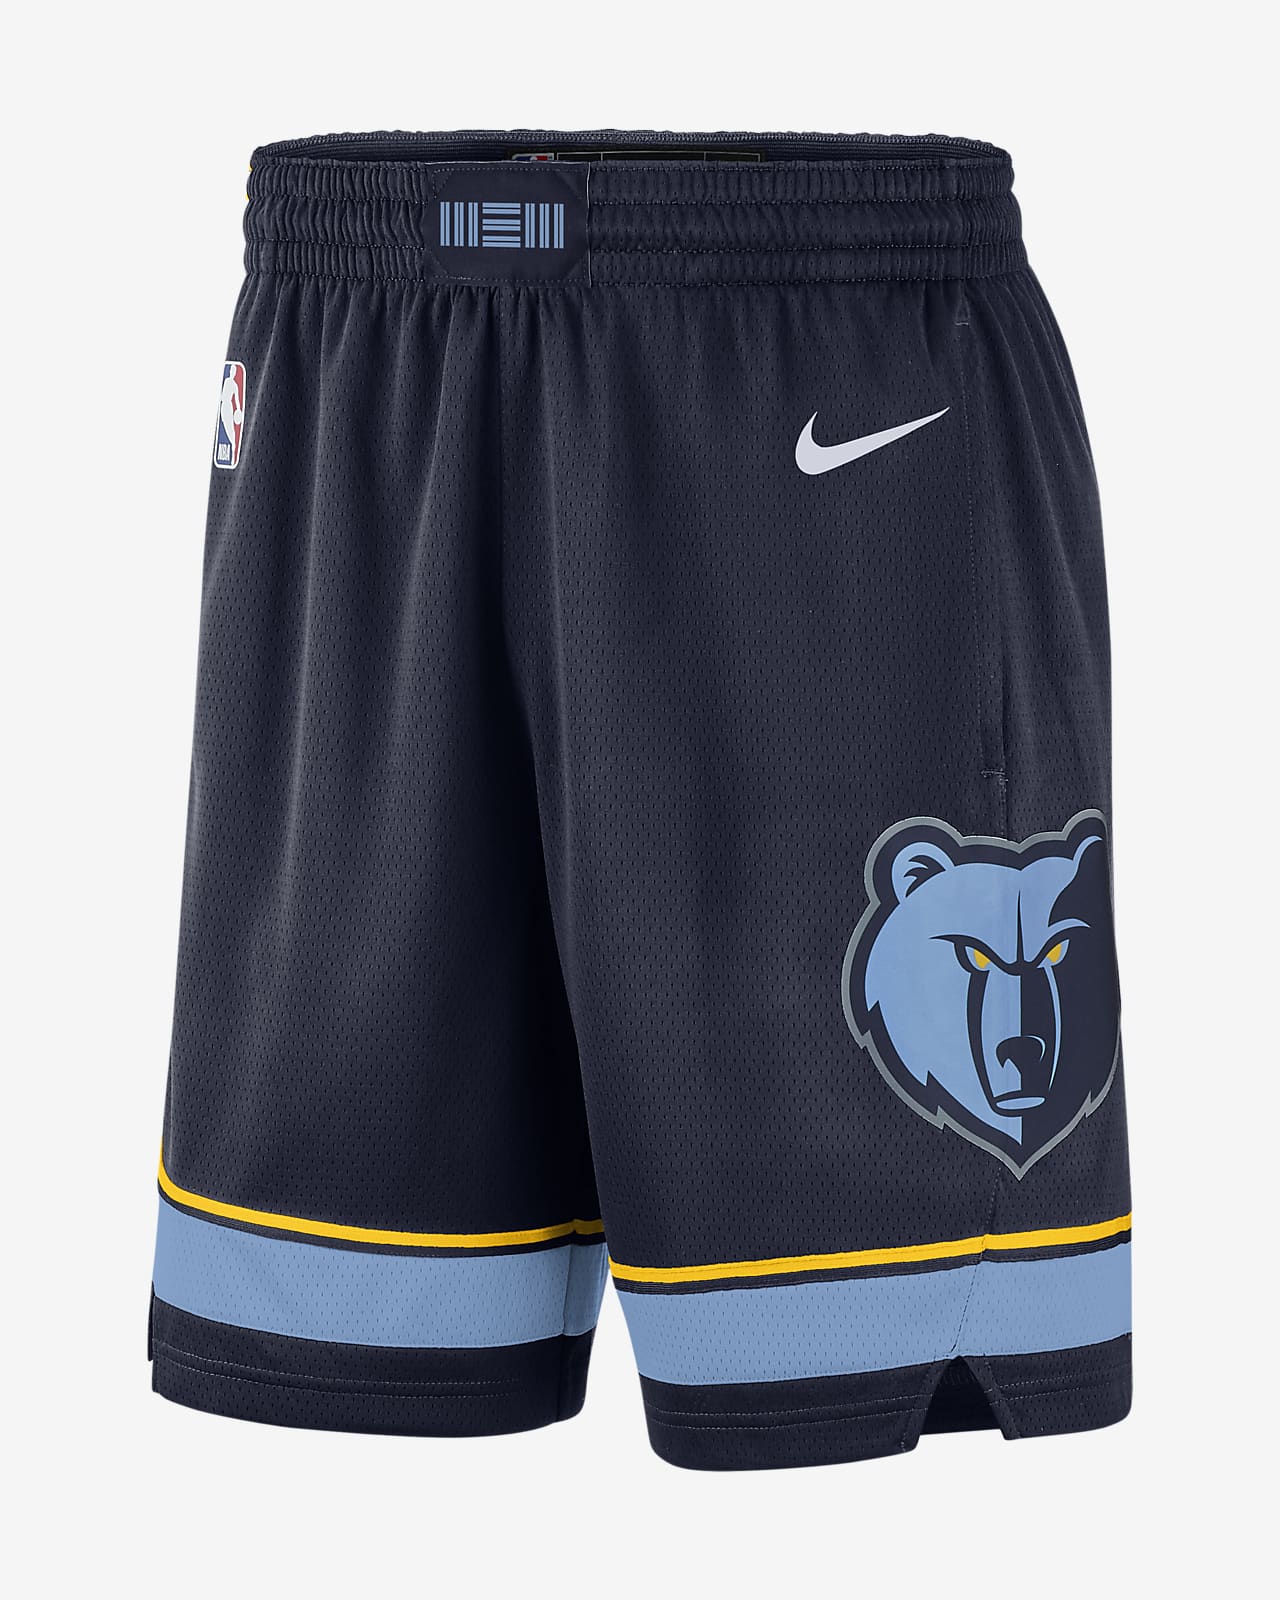 Memphis Grizzlies Herren Basketball Shorts Stitched City Edition Schwarz S-2XL 